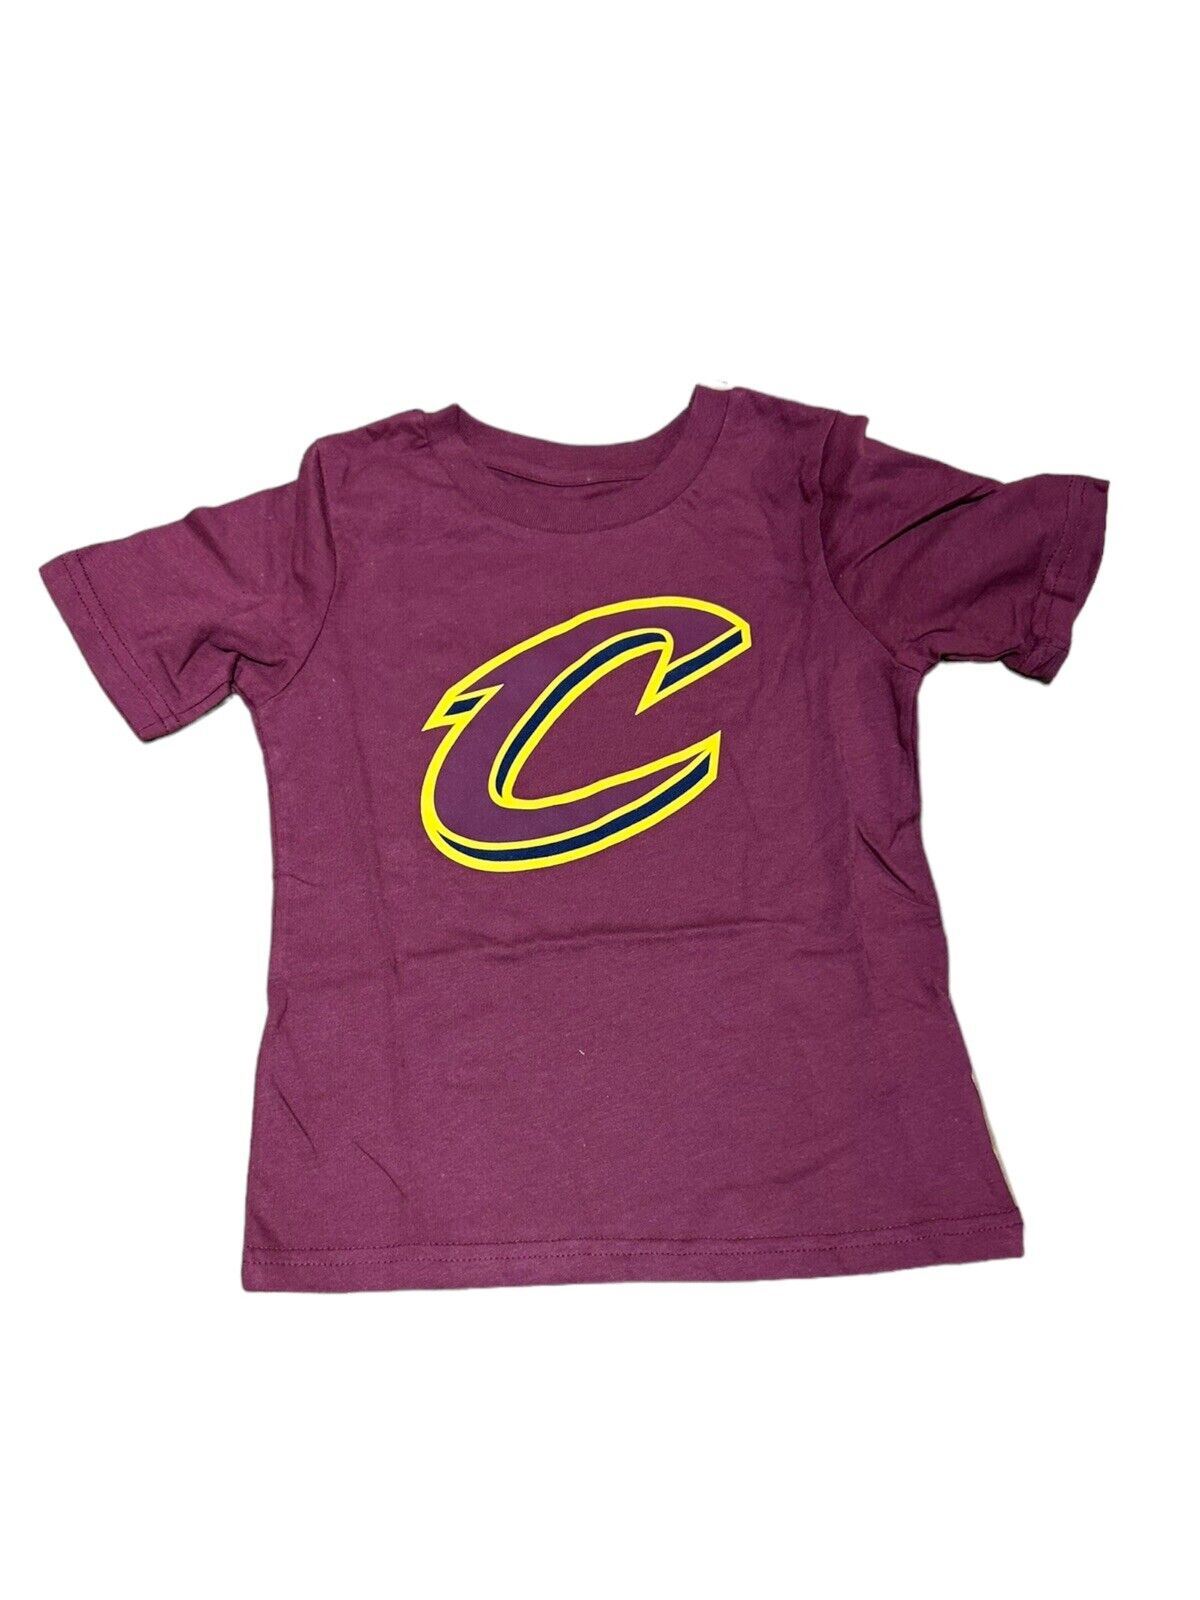 NBA Cleveland Cavaliers T-Shirt Primary Logo Top Kids Children’s 4-5 Years